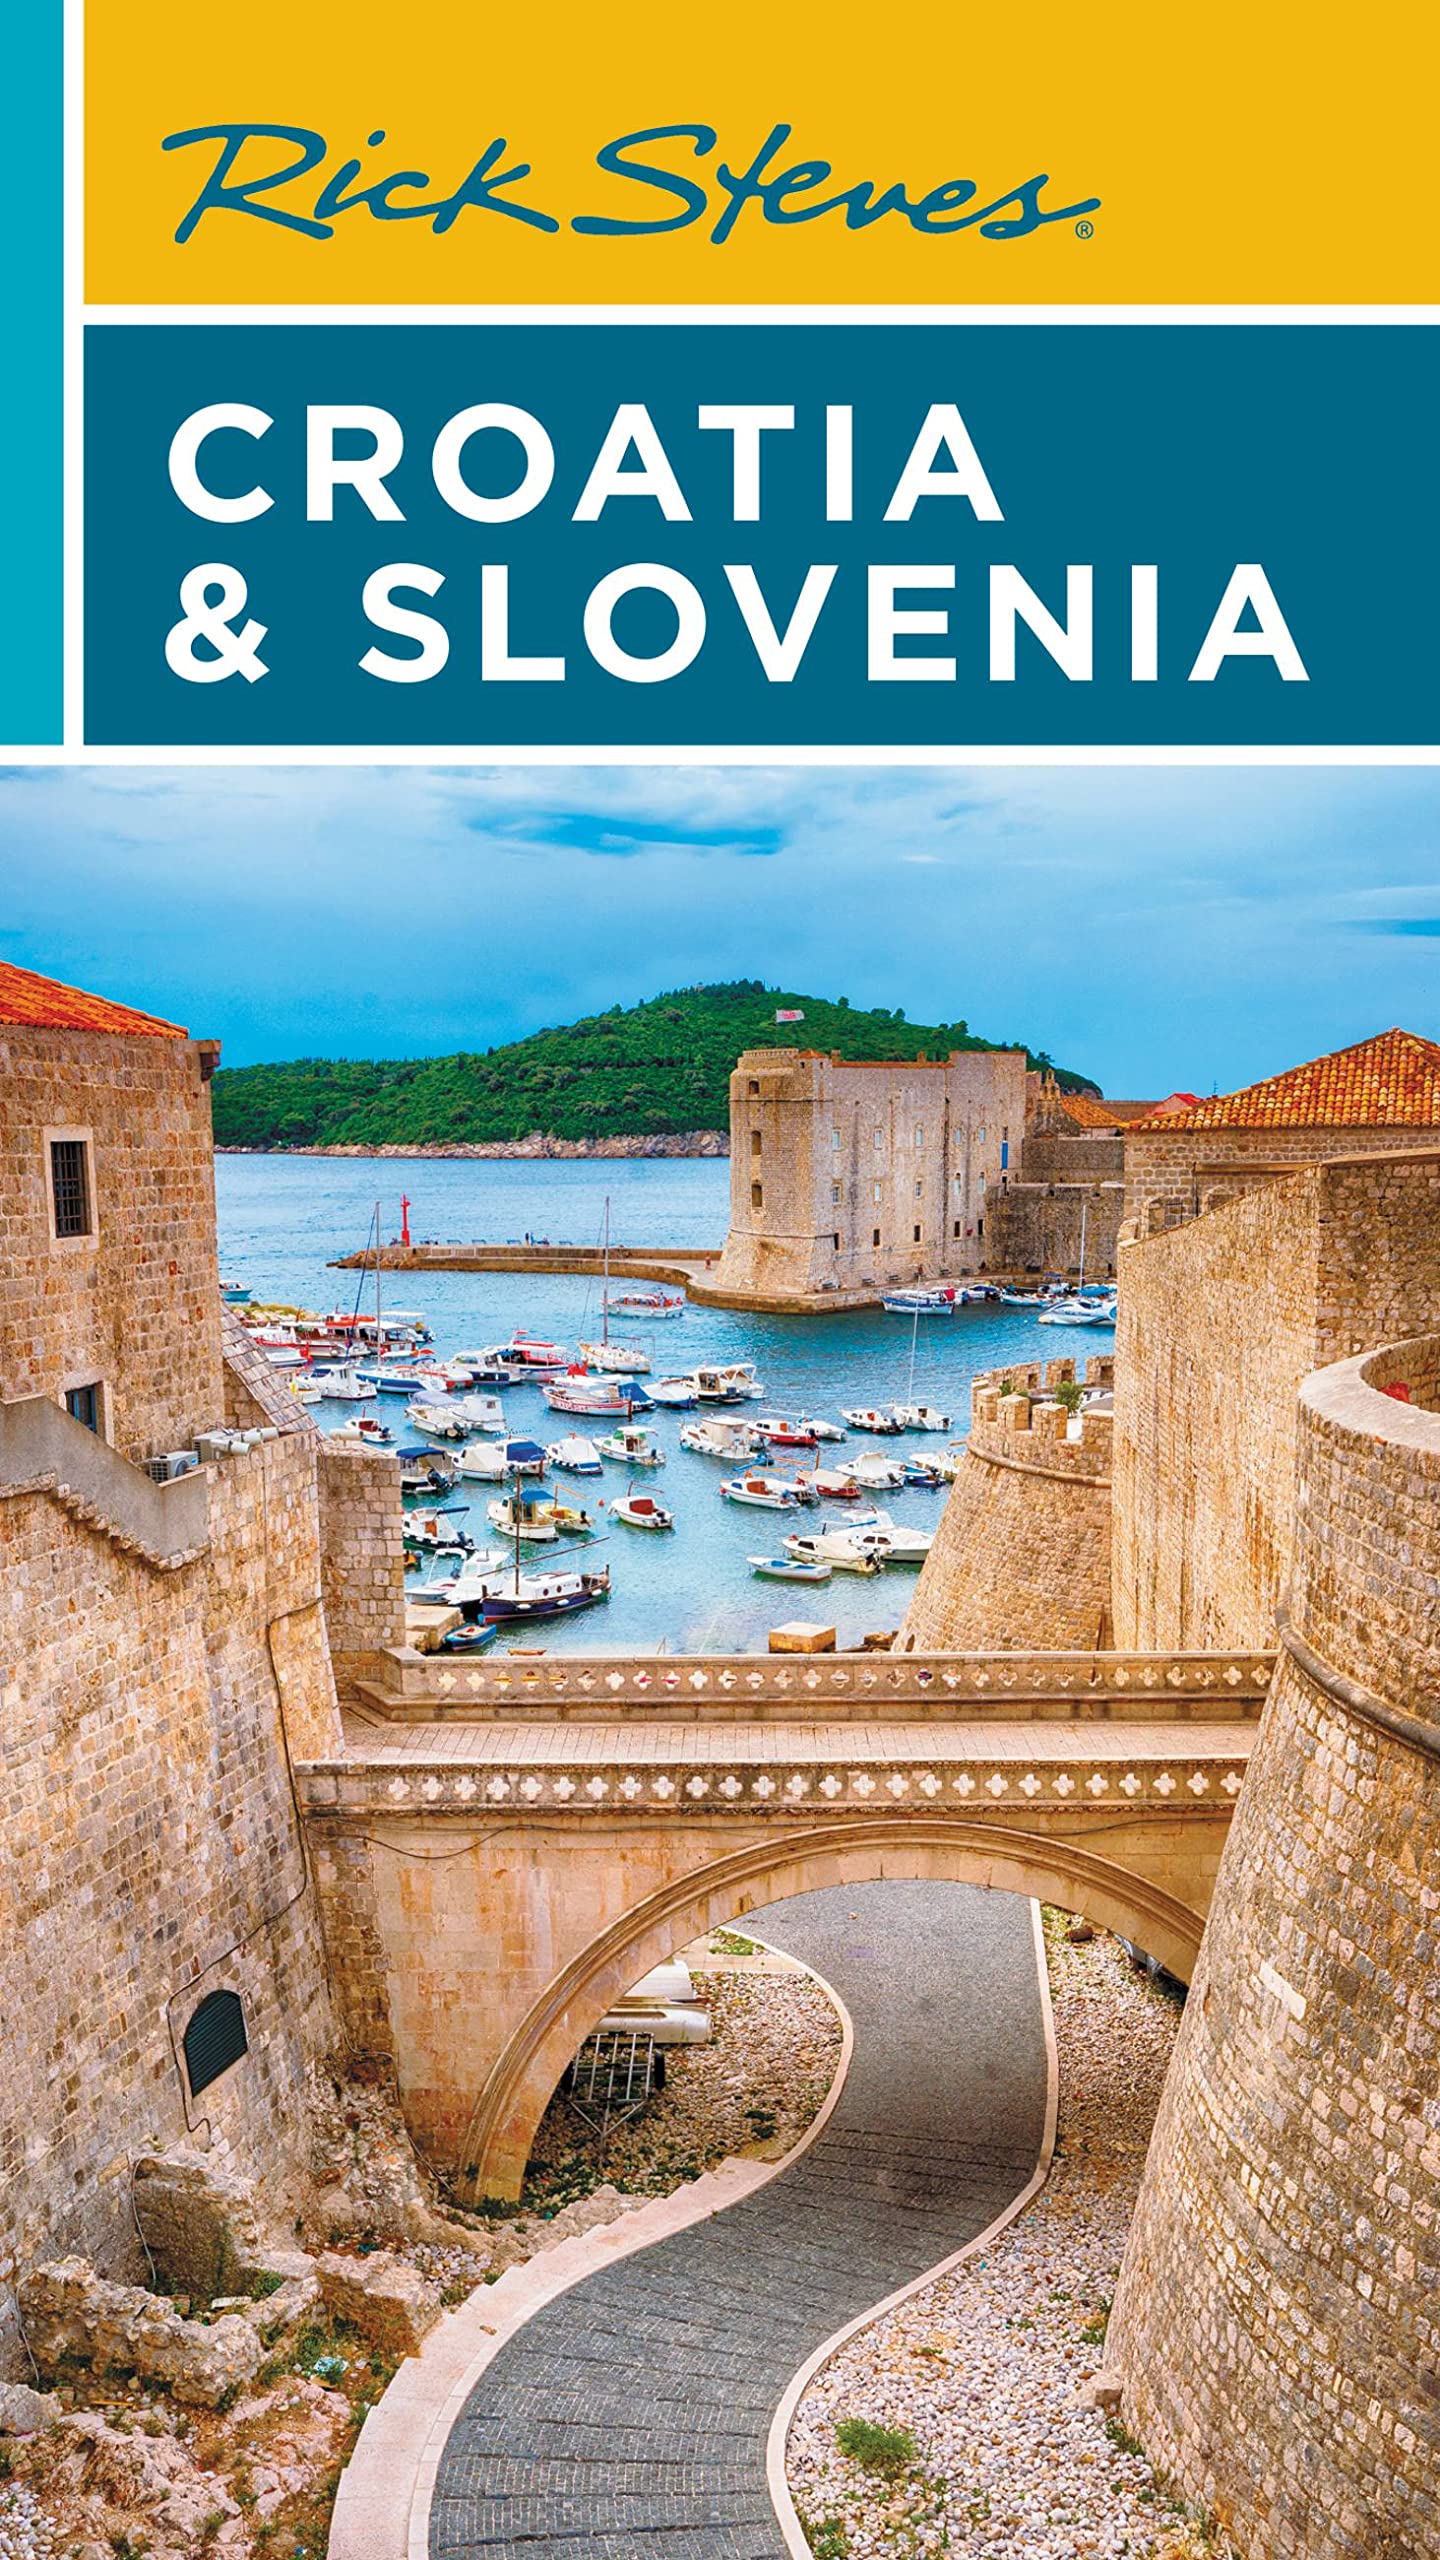 Rick Steves Croatia & Slovenia by Steves, Rick